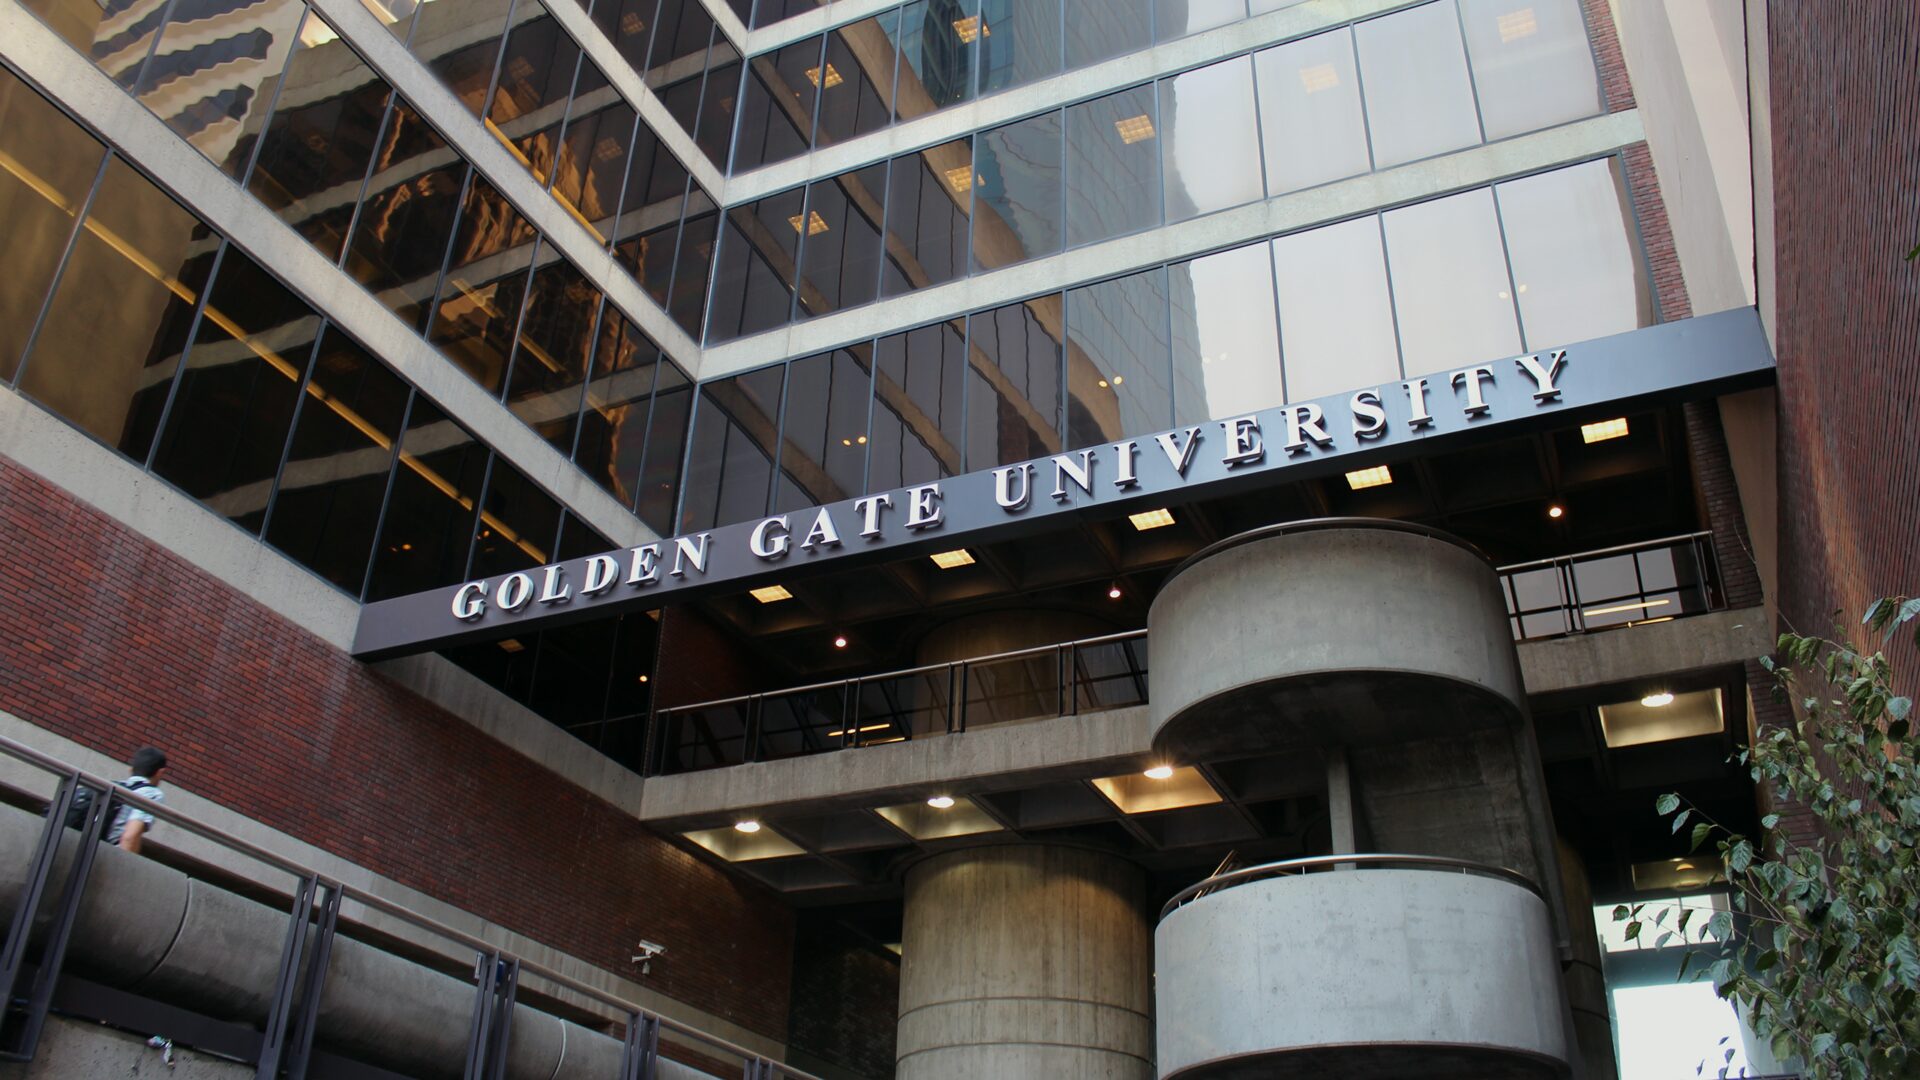 Entrance to Golden Gate University building.